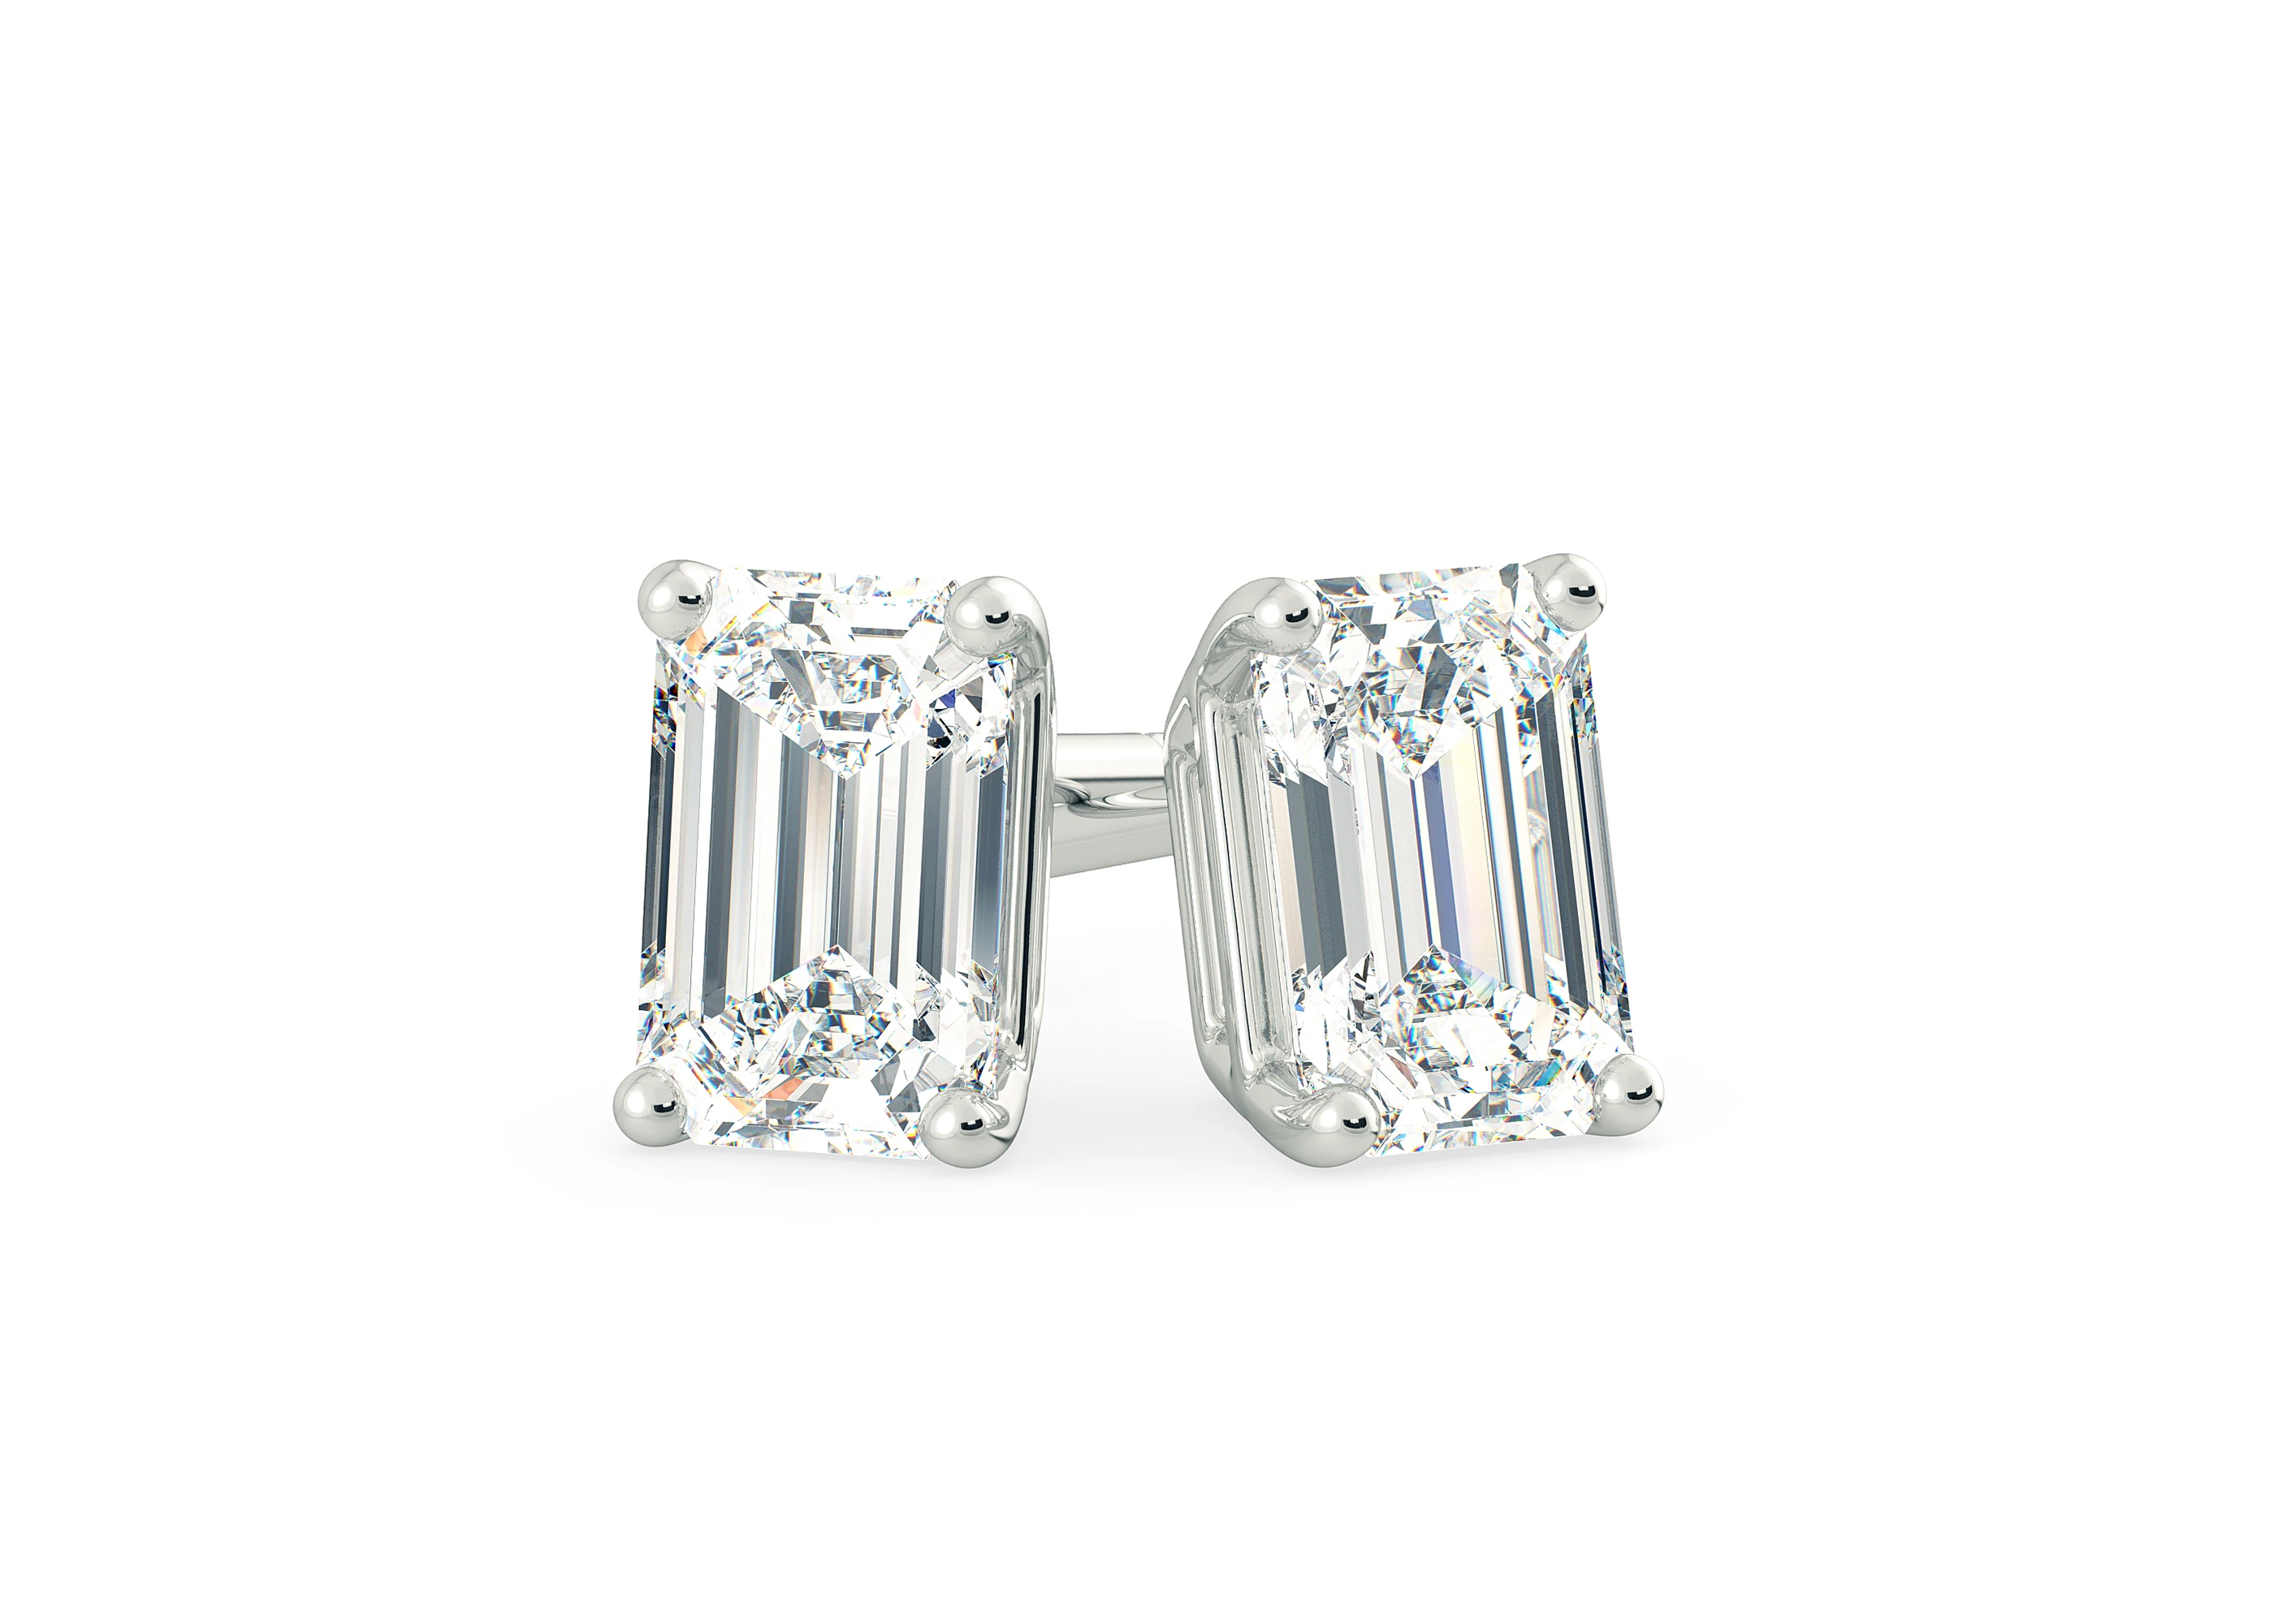 One Carat Emerald Diamond Stud Earrings in 9K White Gold